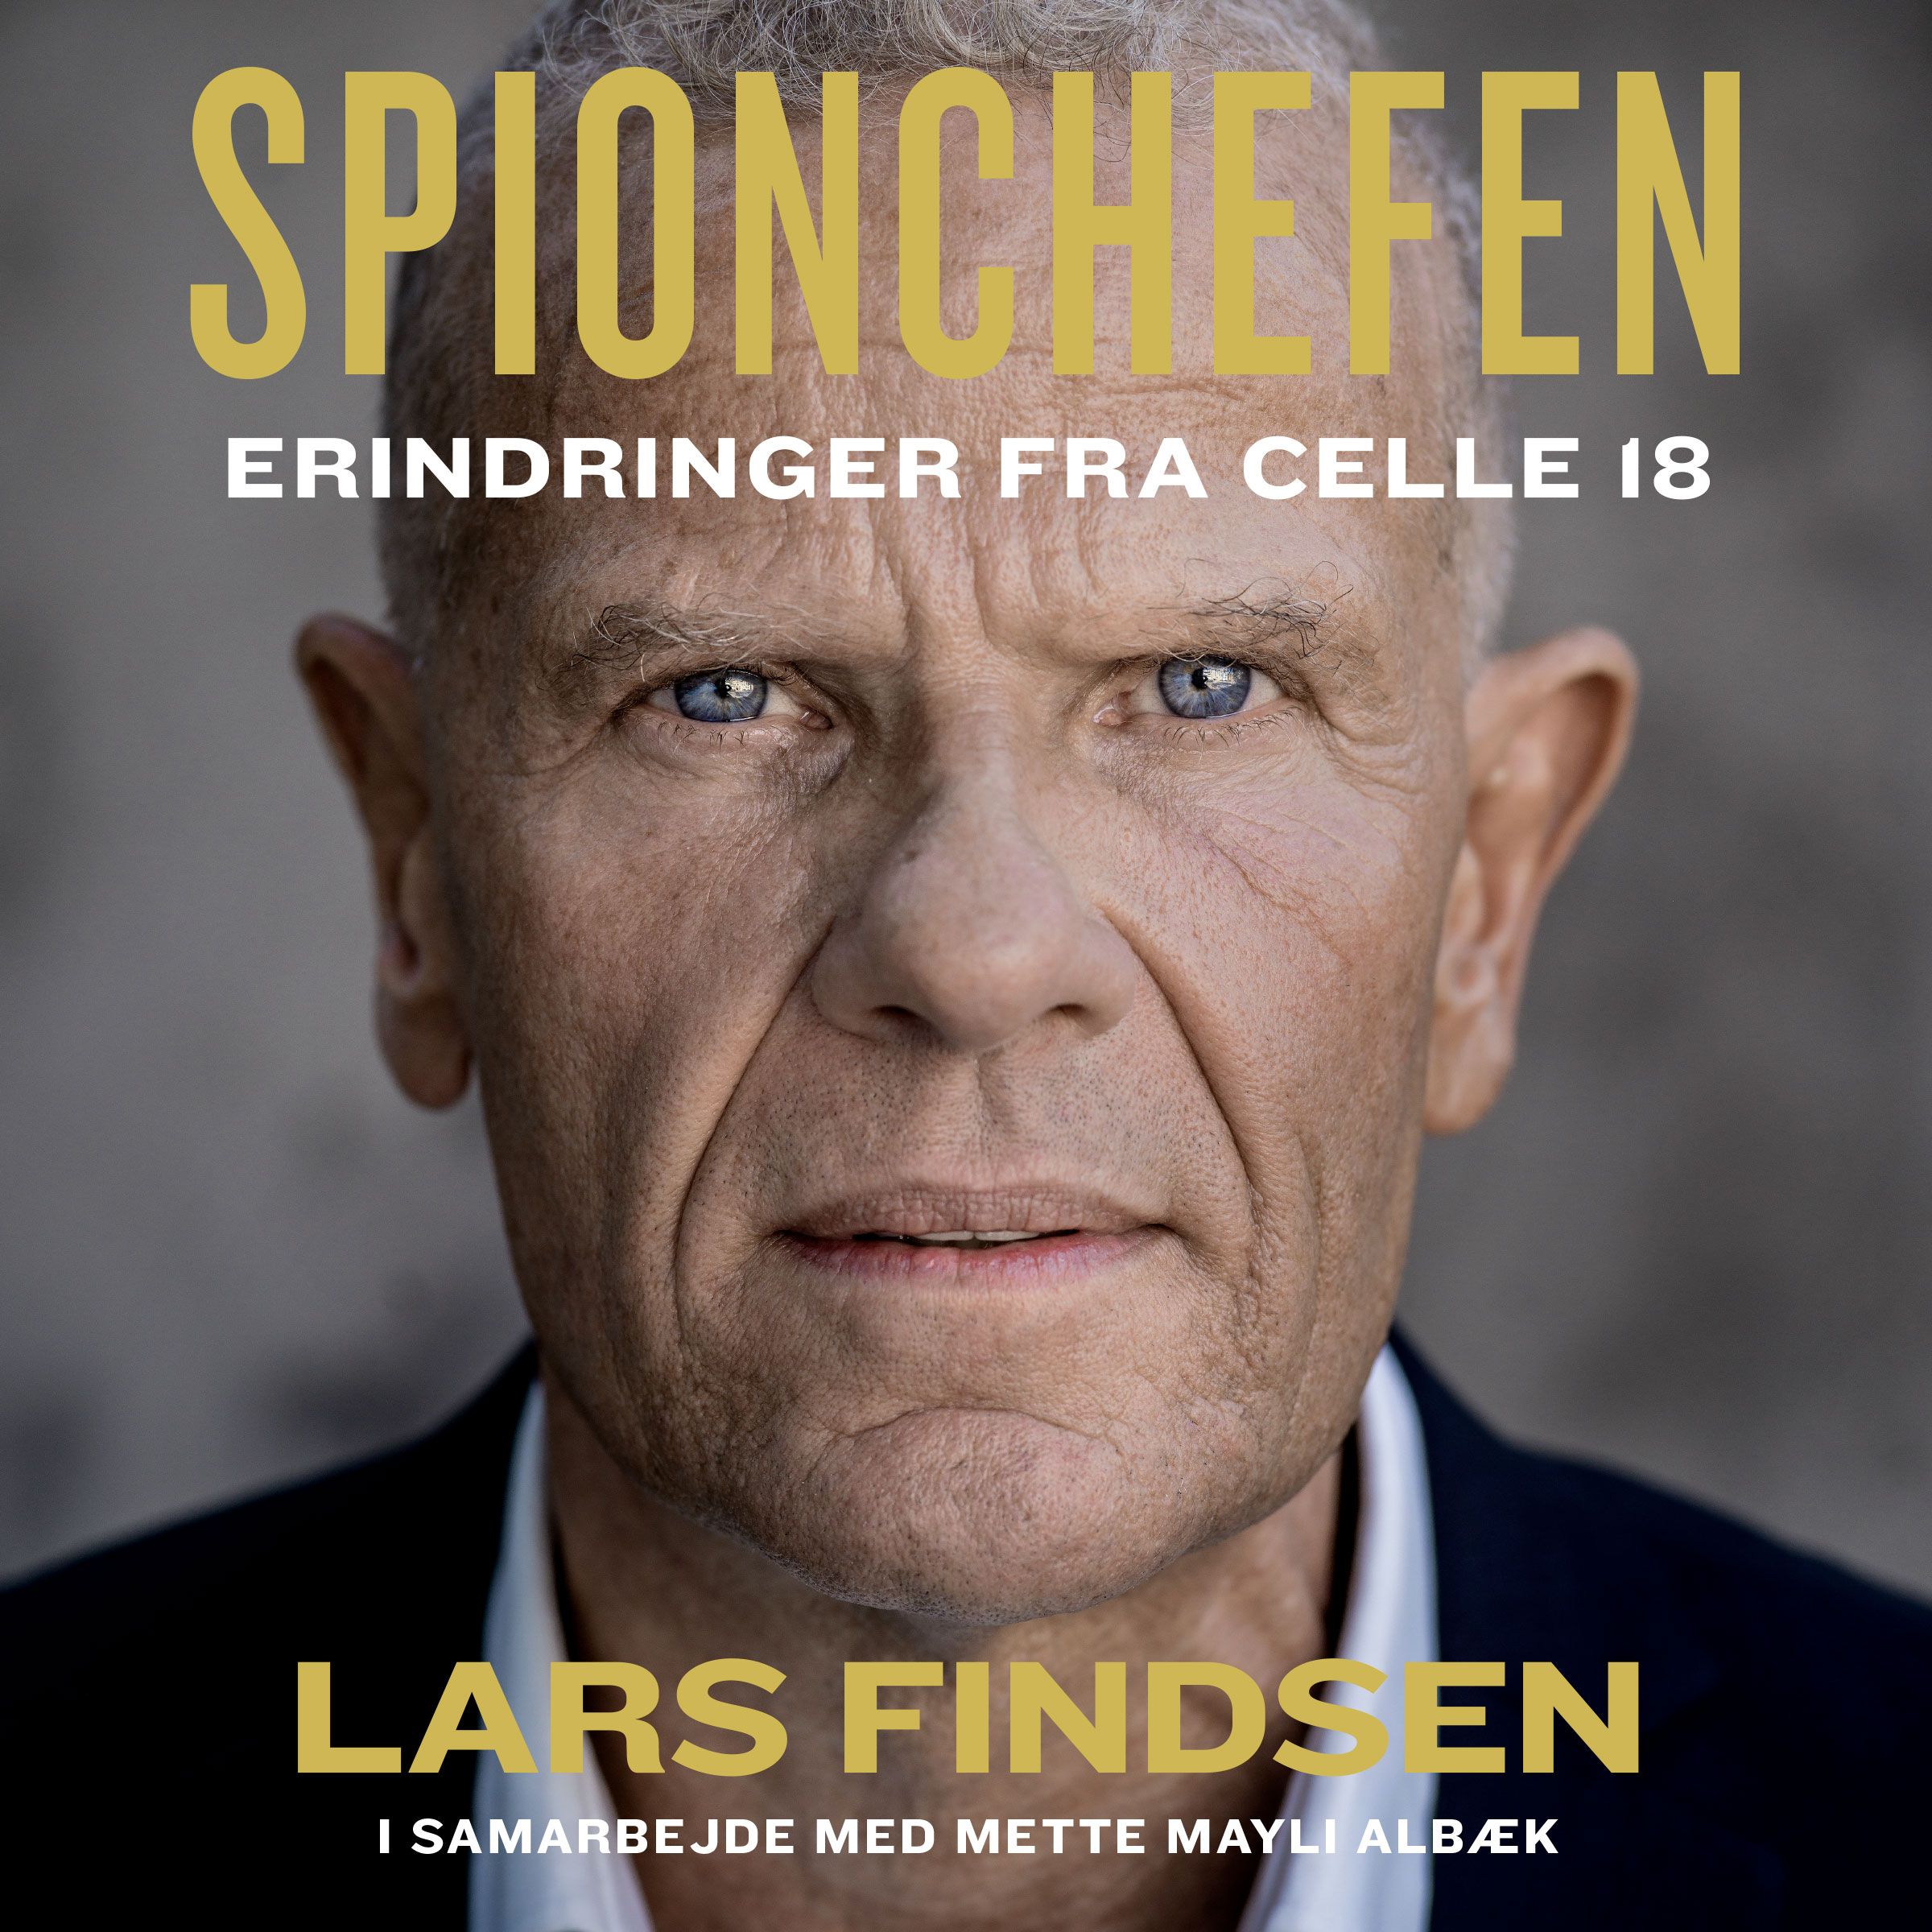 Spionchefen, ljudbok av Mette Mayli Albæk, Lars Findsen